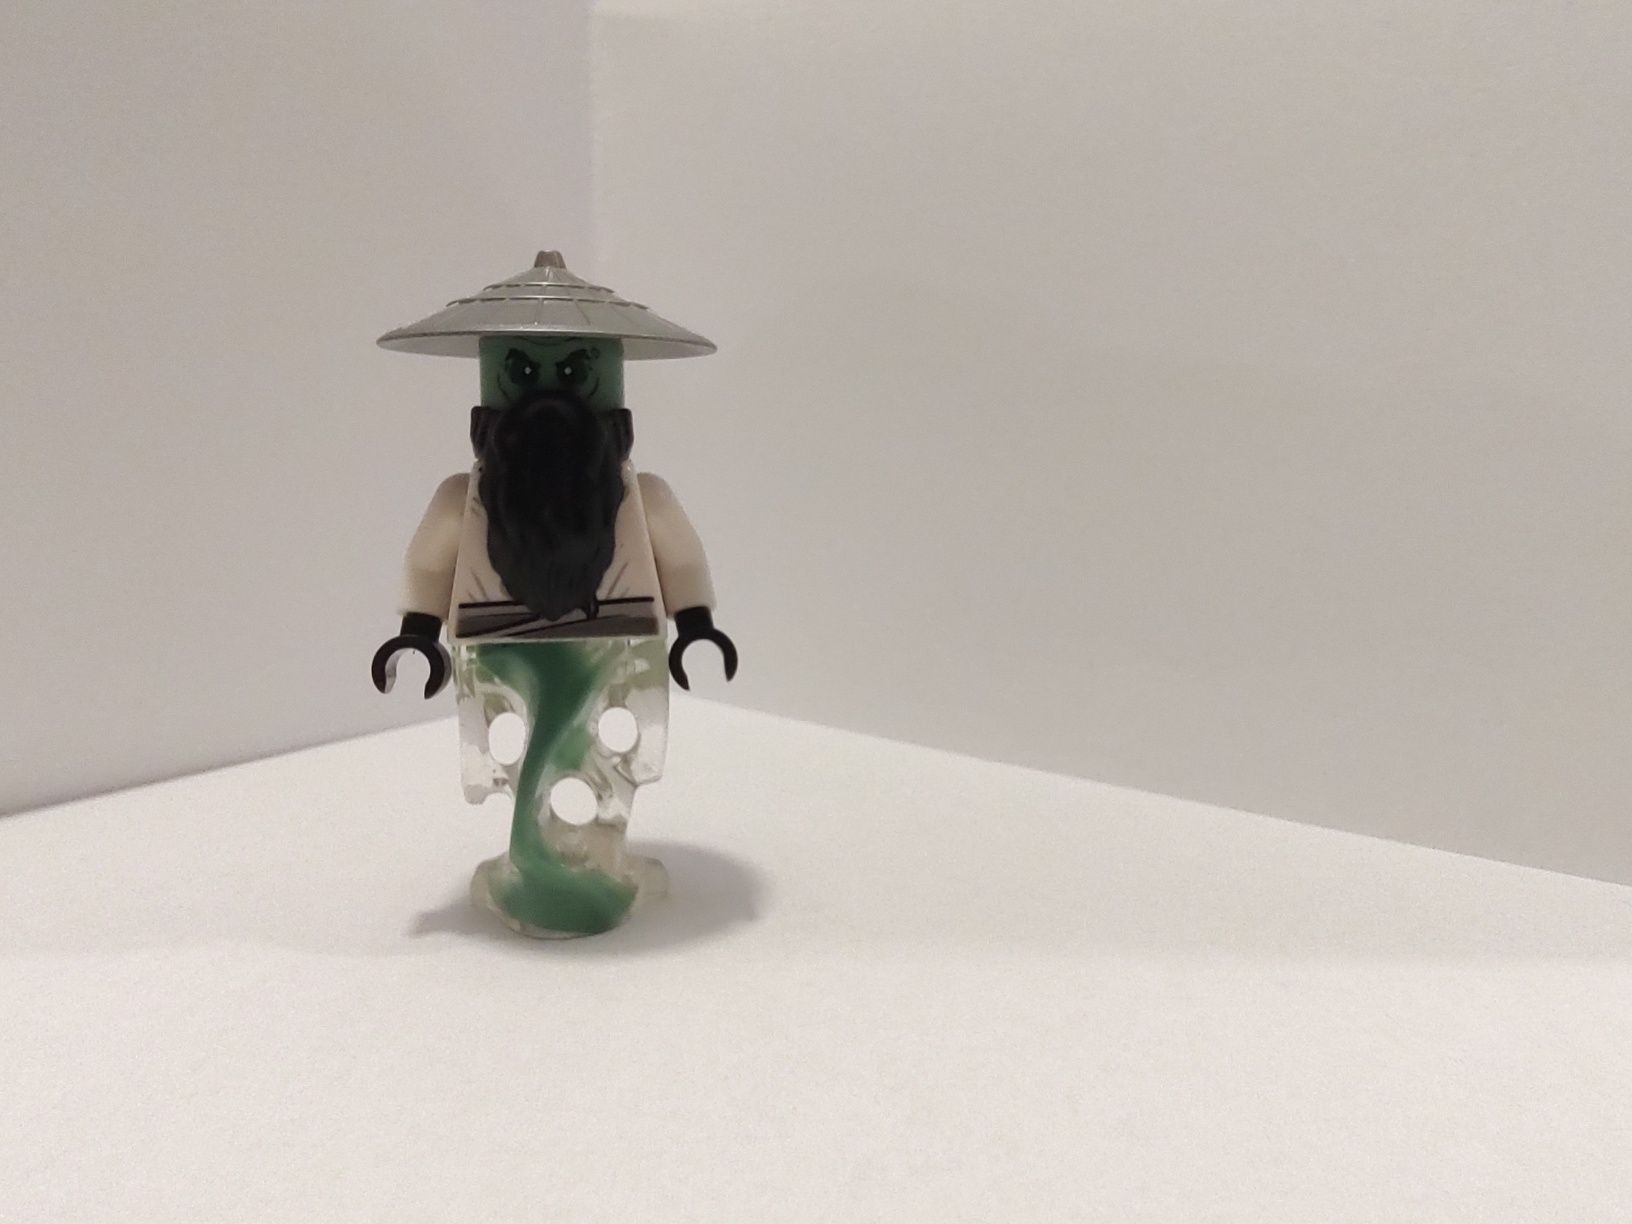 Vand minifigurina lego Ninjago sensei yang foarte rară